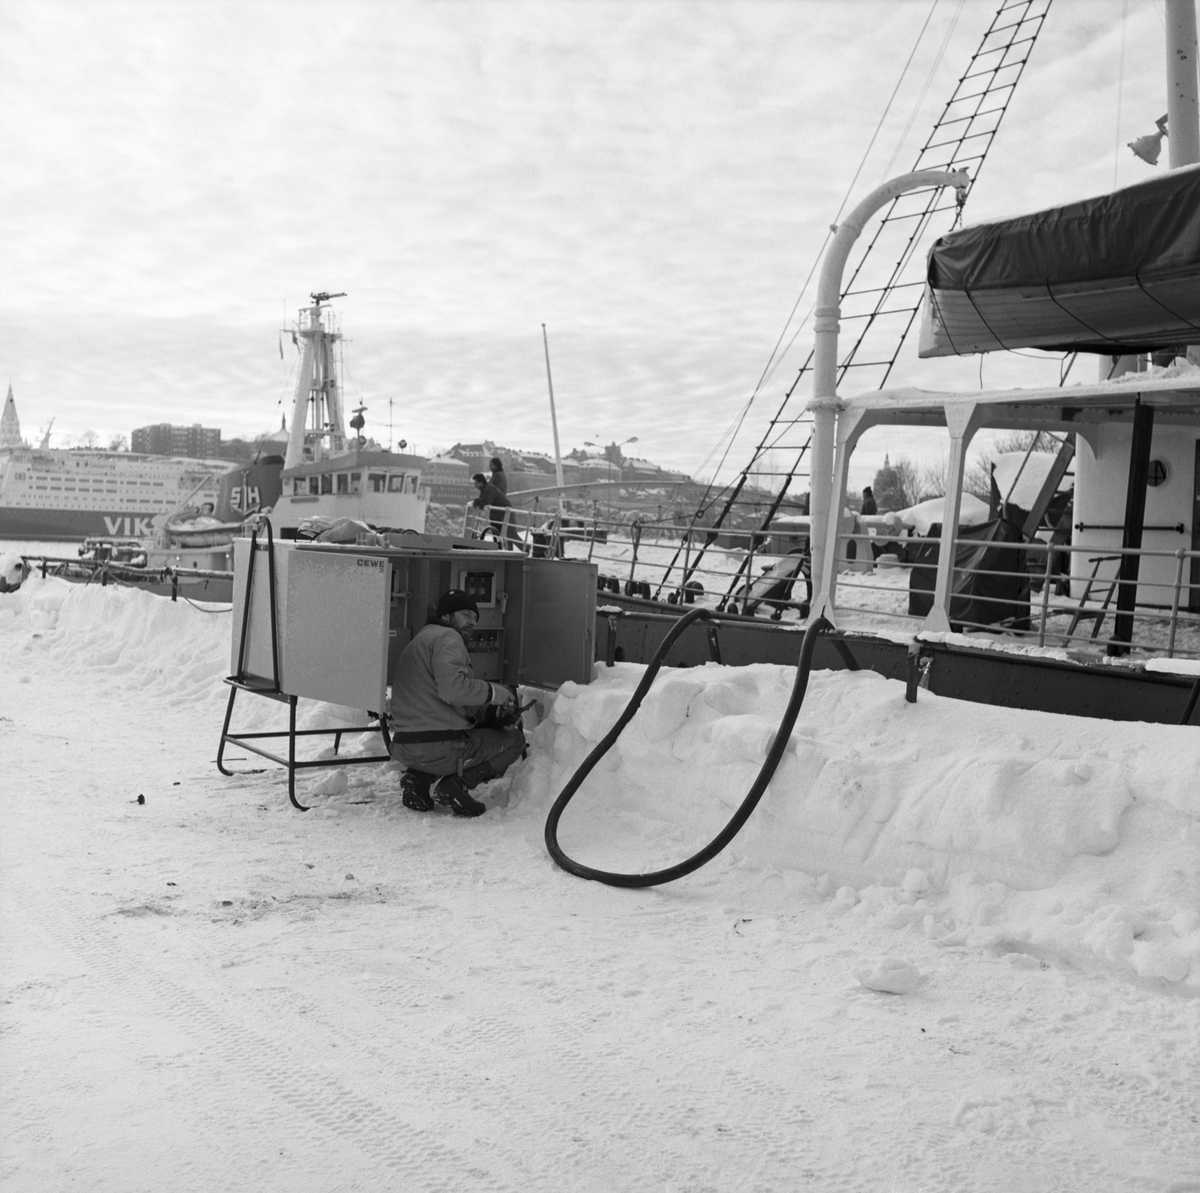 Foto av isbrytaren Sankt Erik vid kaj under vintern 1987.